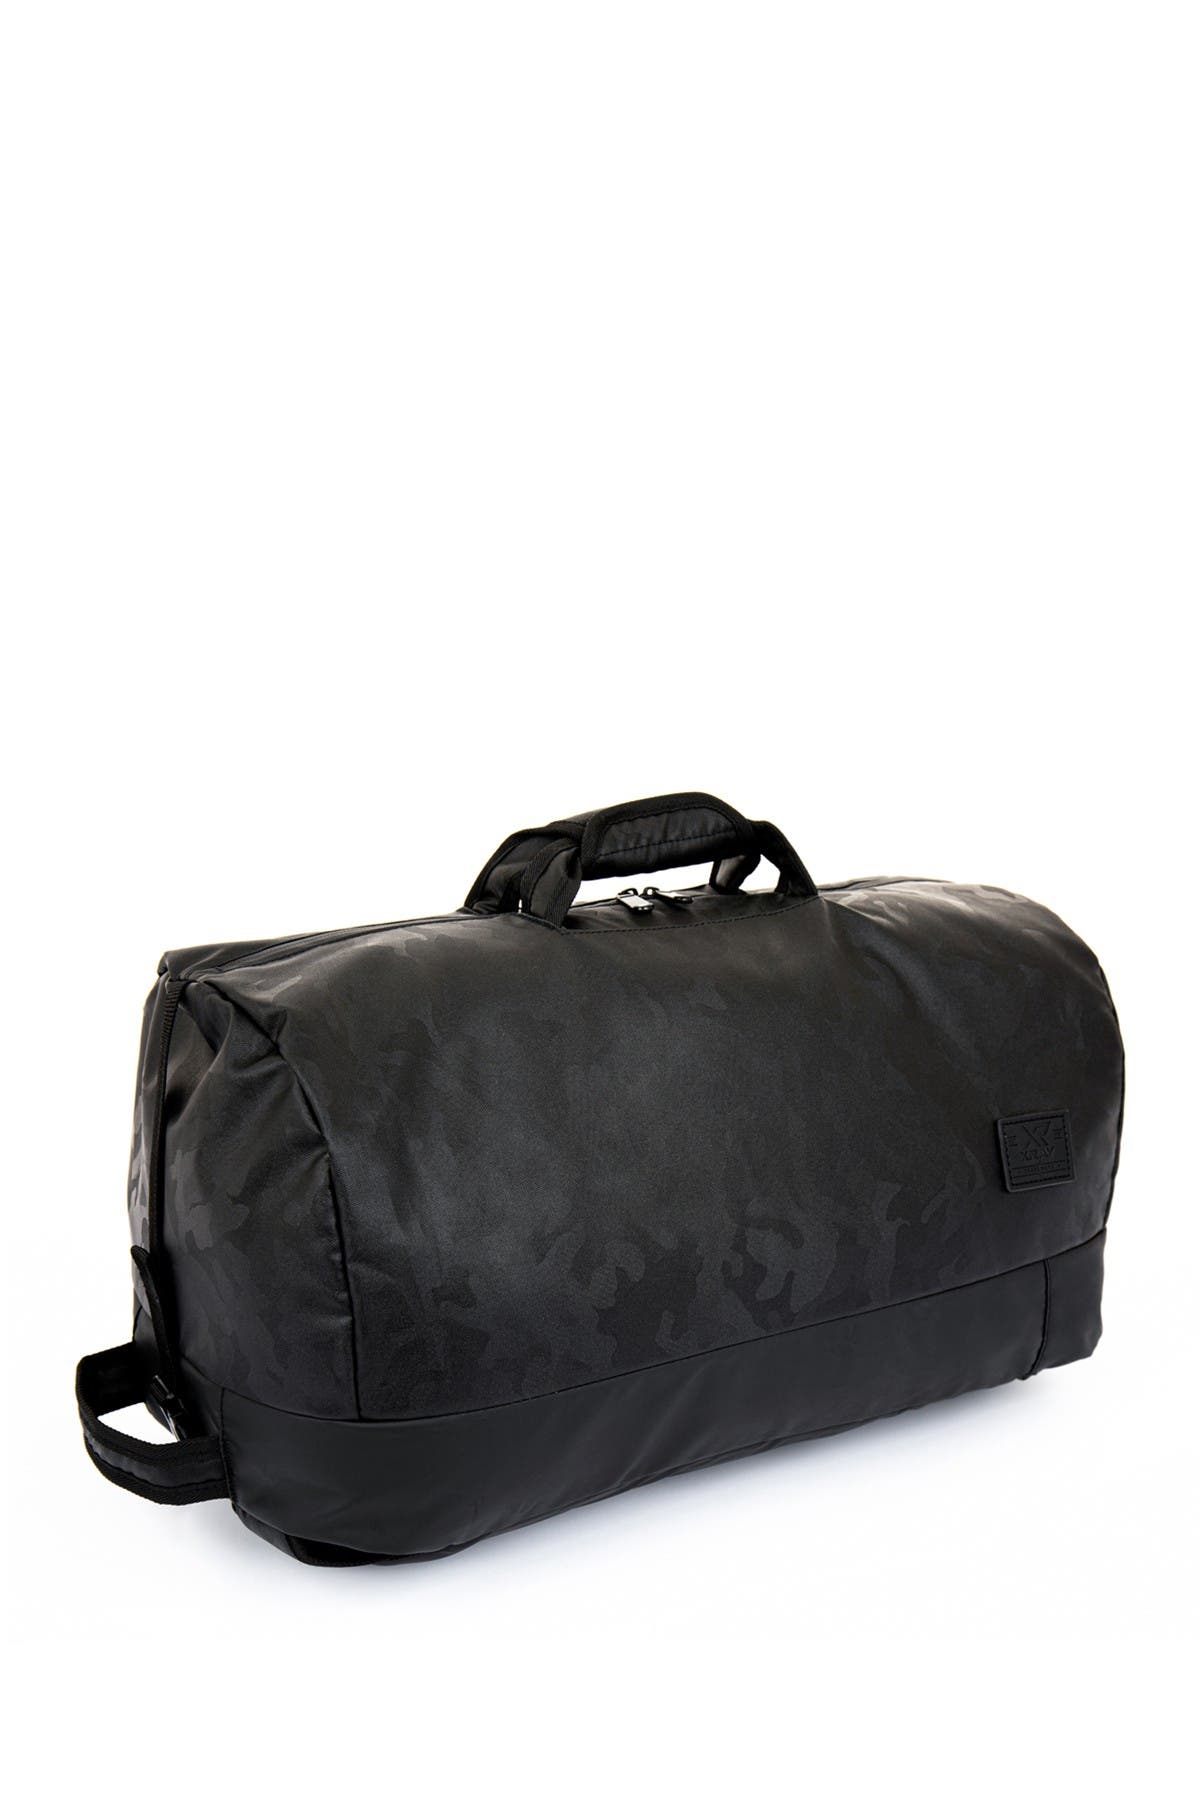 xray waterproof travel duffel bag